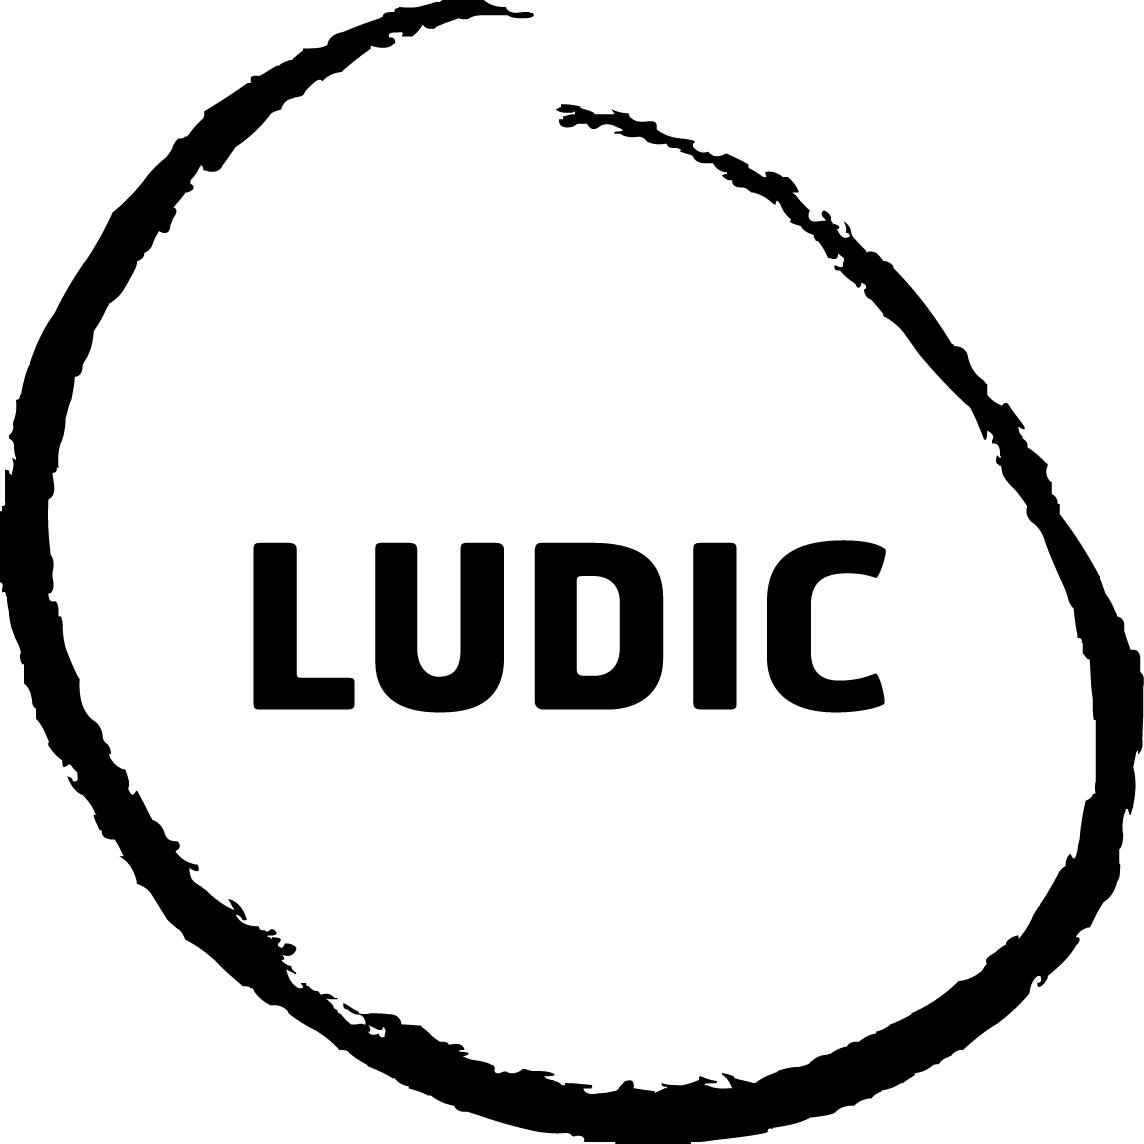 LUDIC_LOGO_BLACK_new News